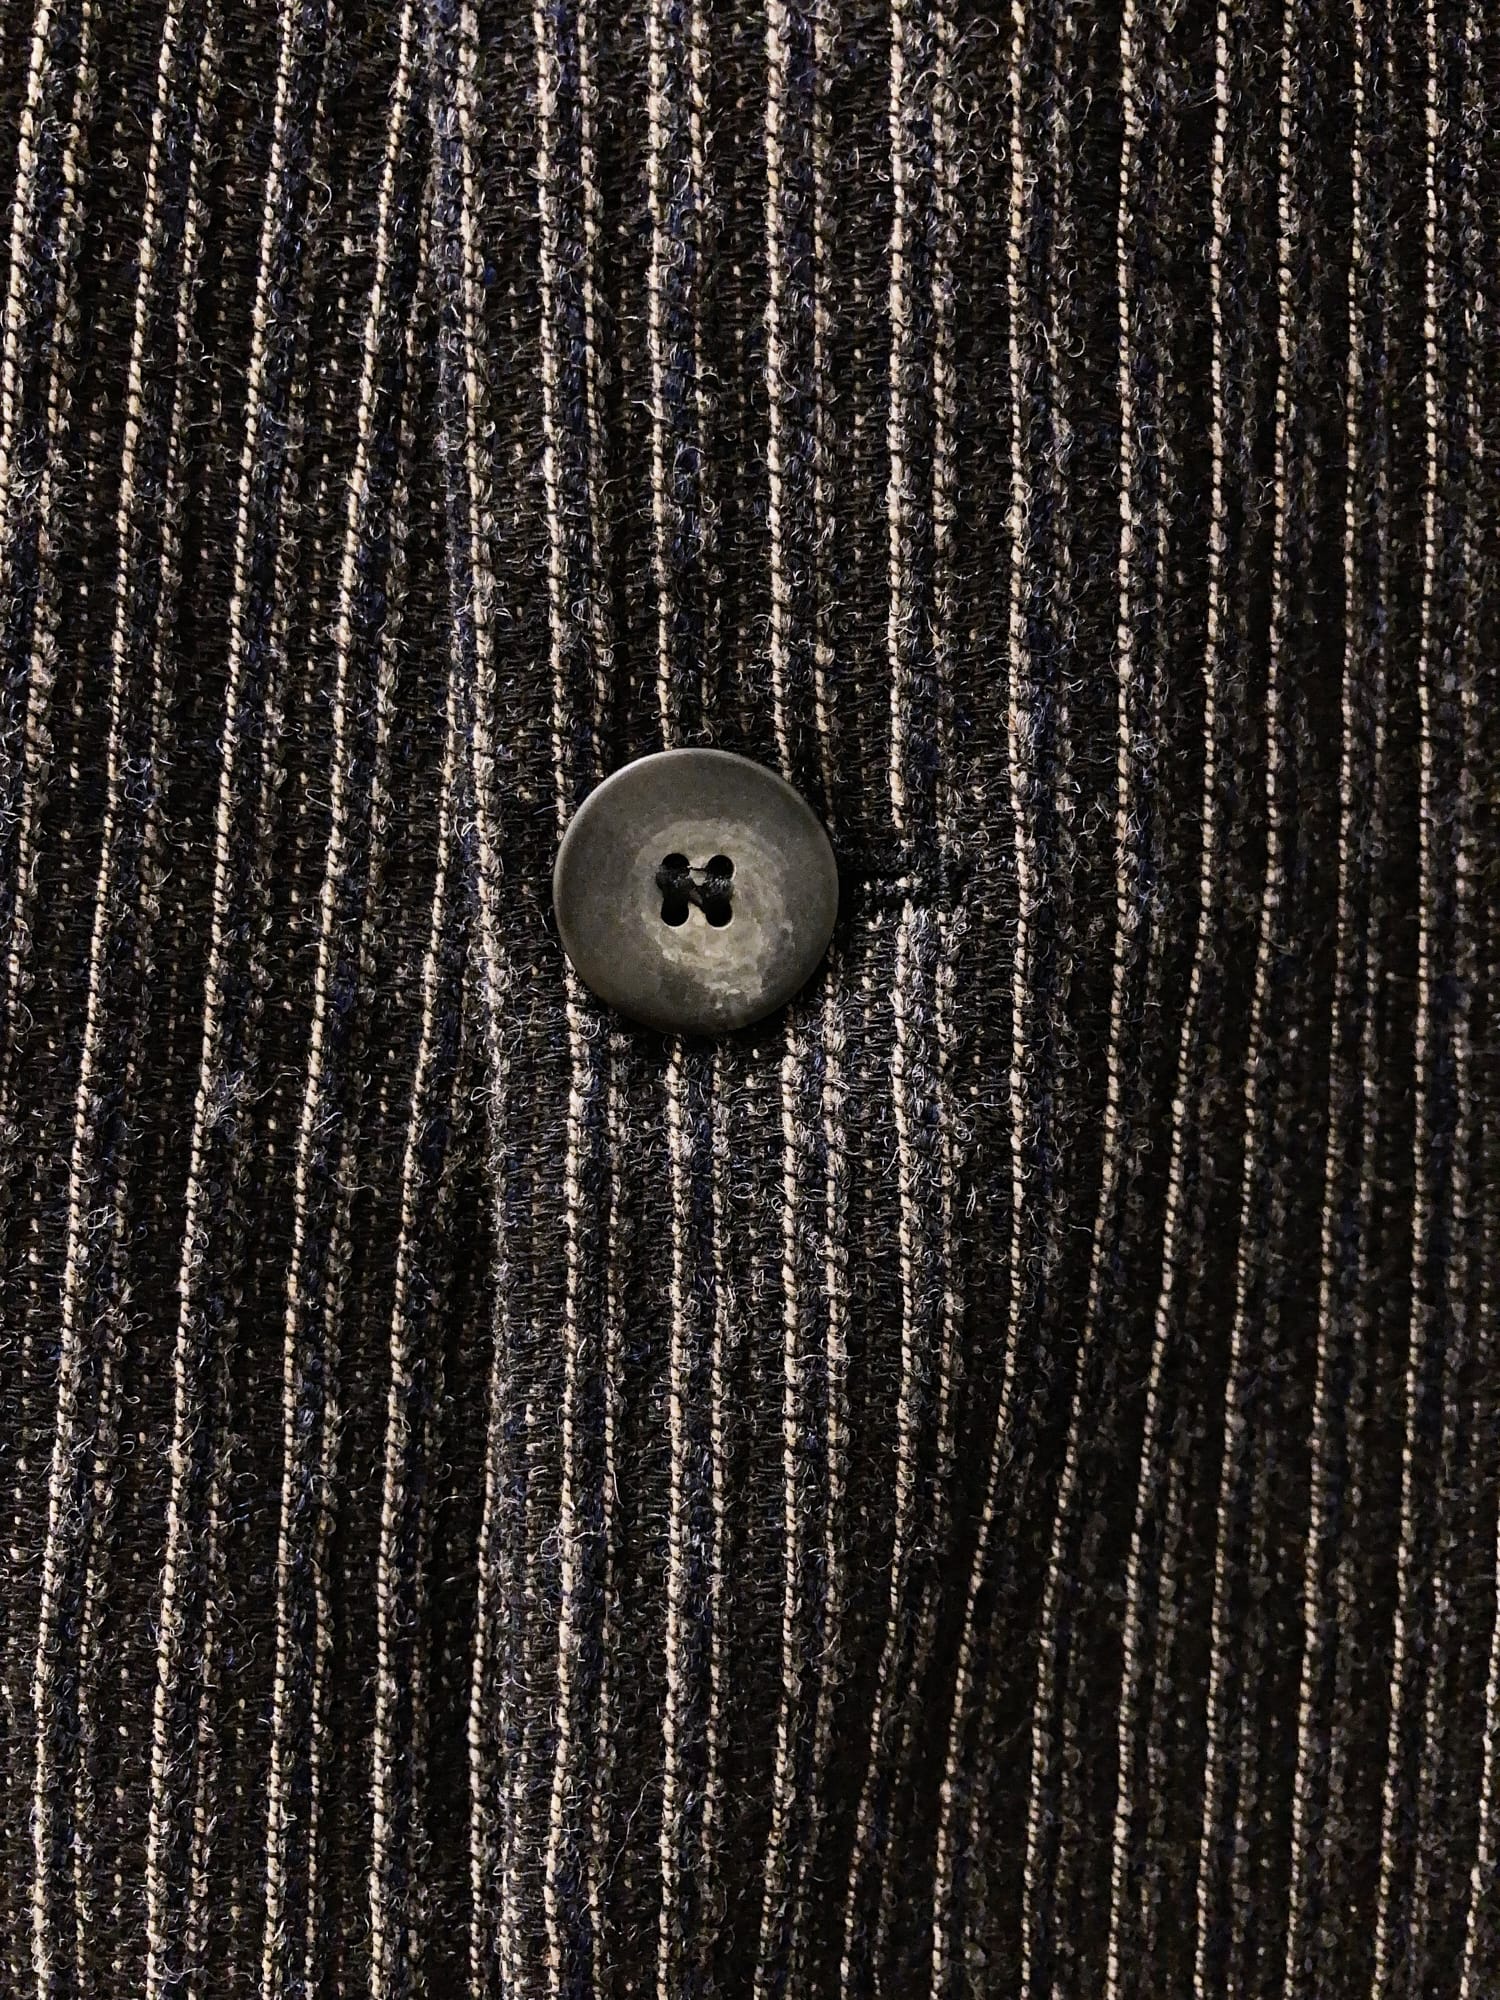 Maurizio Bonas 1990s dark grey striped wool cotton three button blazer - size 46